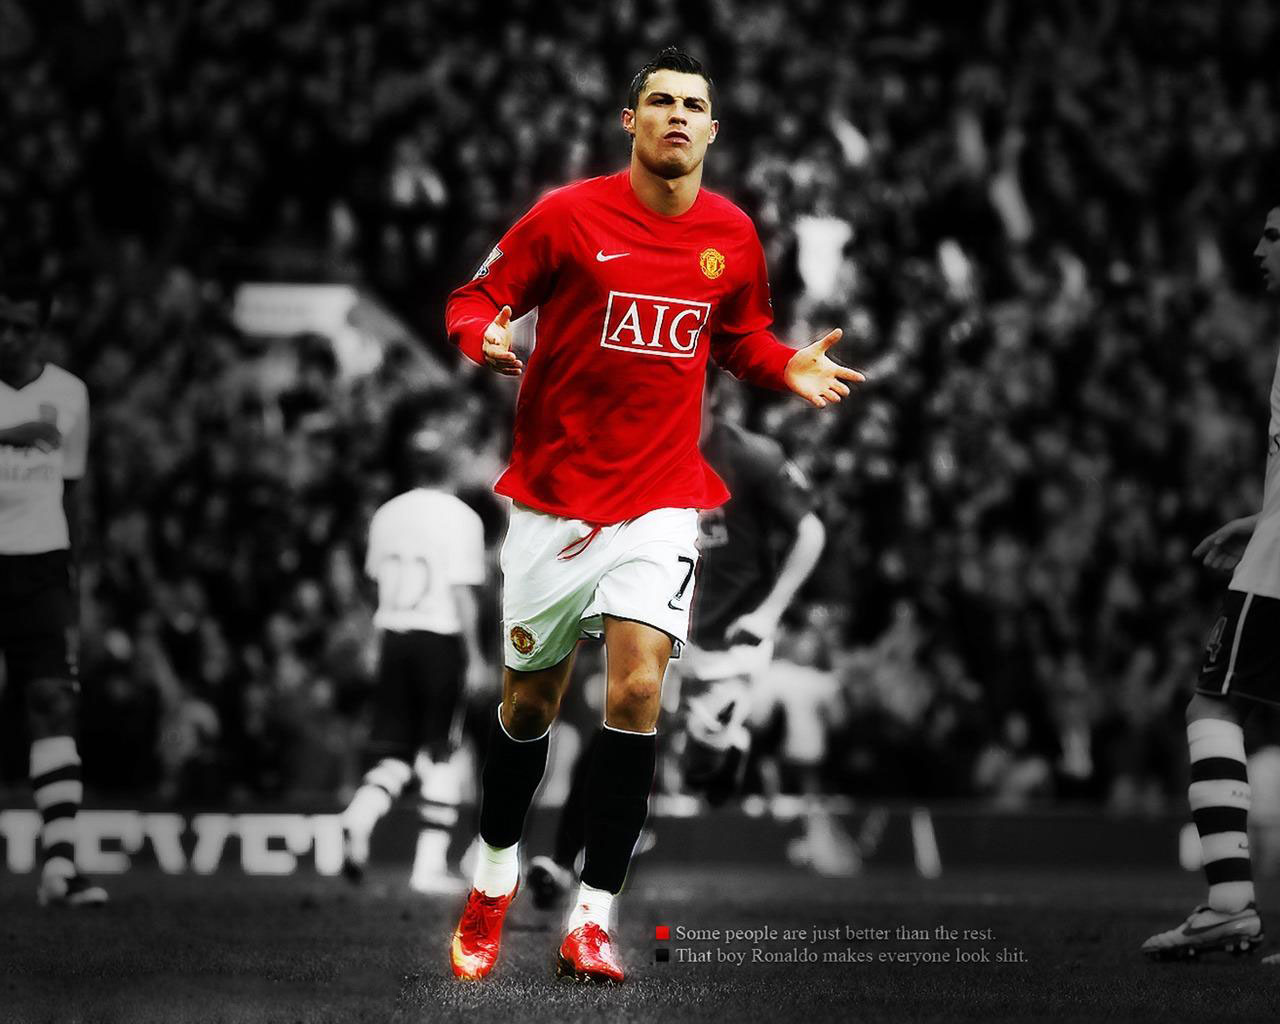 http://1.bp.blogspot.com/-A9puPY_7i4I/T7TY1hOEOrI/AAAAAAAACyY/cvVxfAWLeTI/s1600/Cristiano-Ronaldo-Wallpaper+%281%29.jpeg